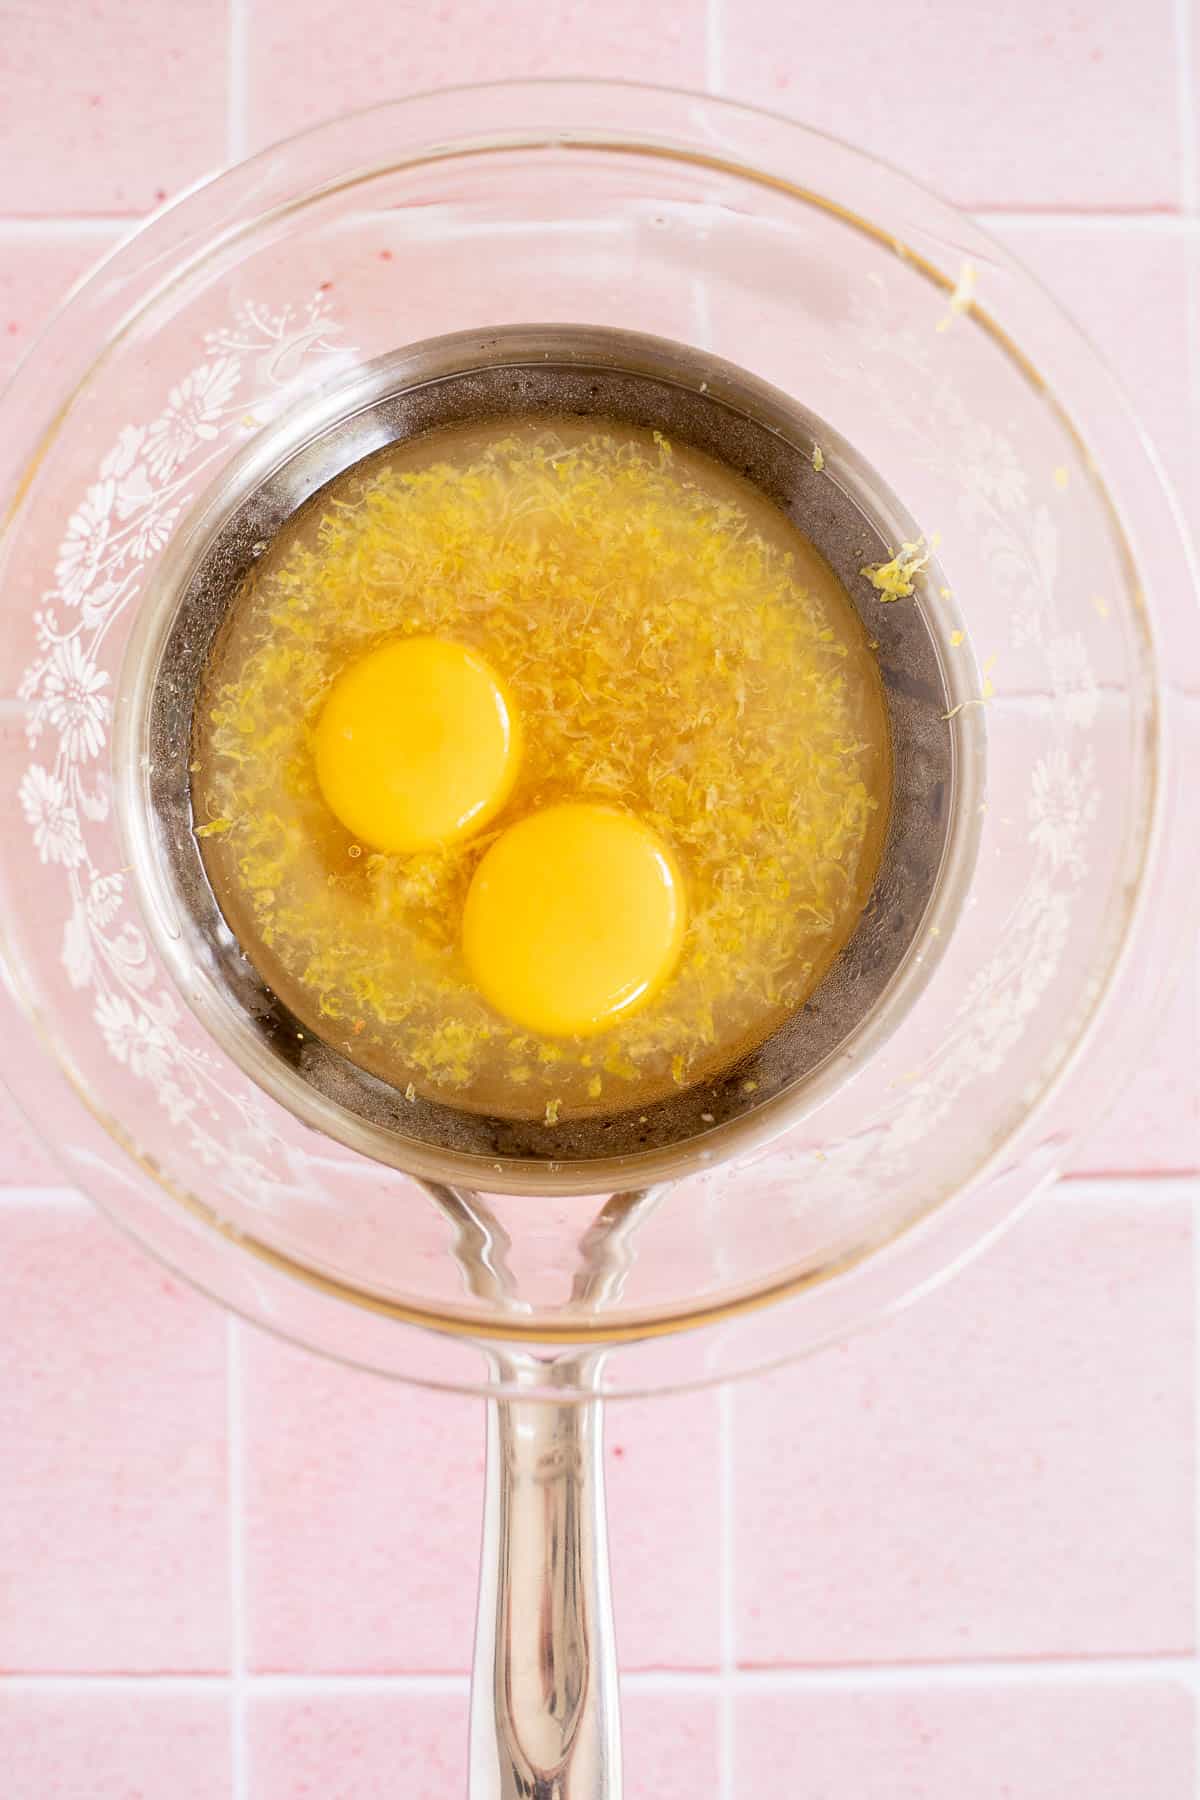 lemon juice, lemon zest, sugar, and egg yolks in a glass bowl of a double boiler.